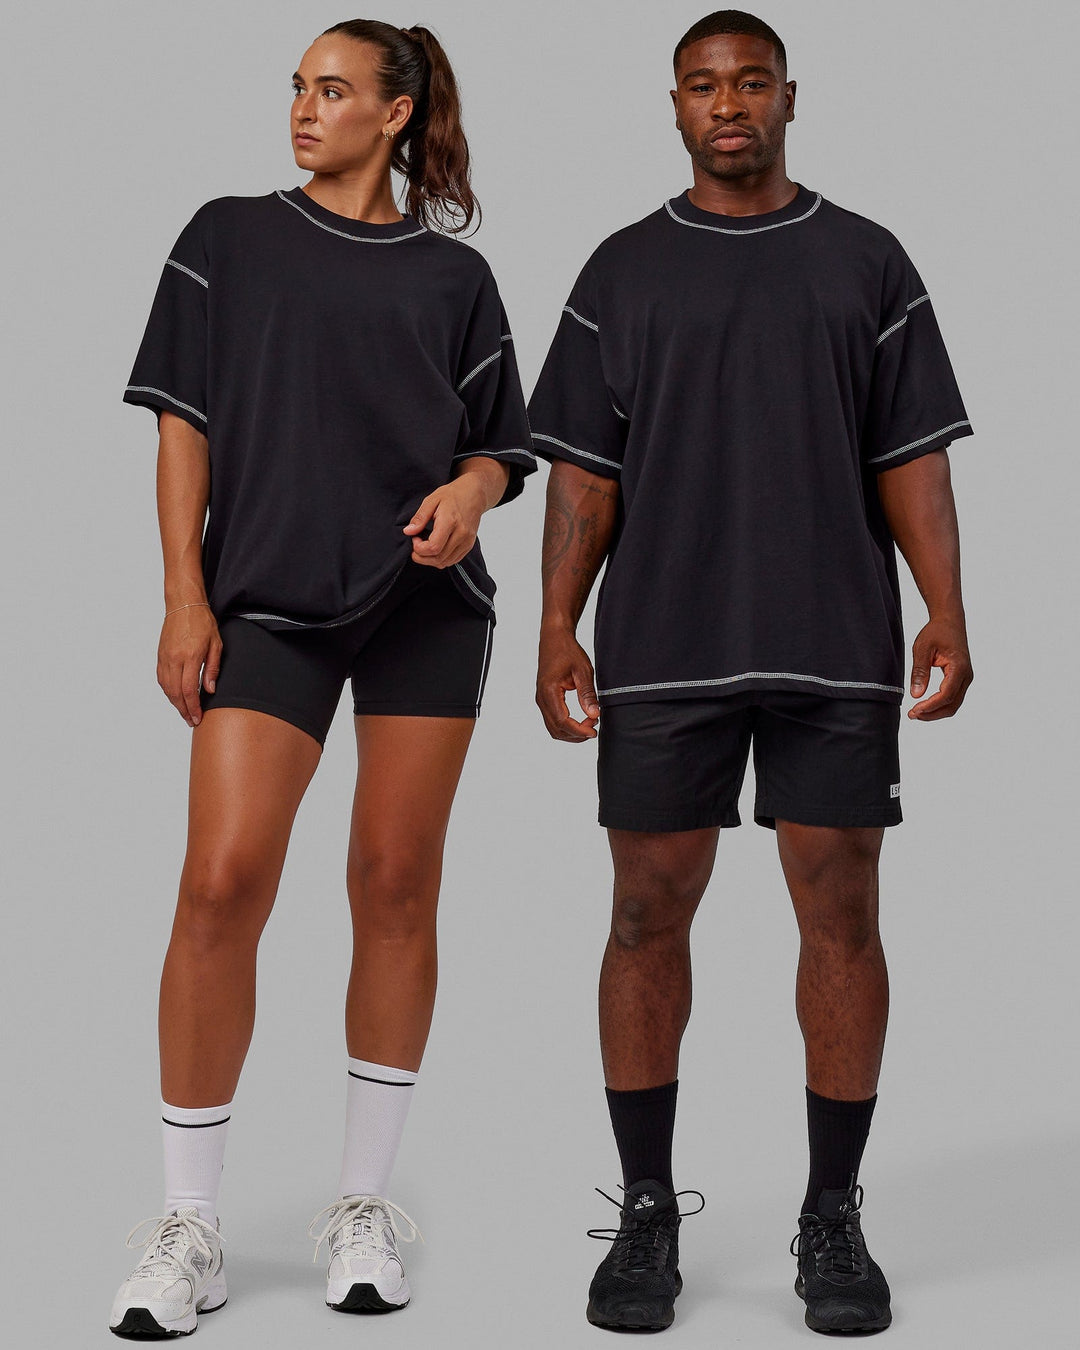 Duo wearing Unisex Overlock Ultra-Heavyweight Tee Oversize - Black-White